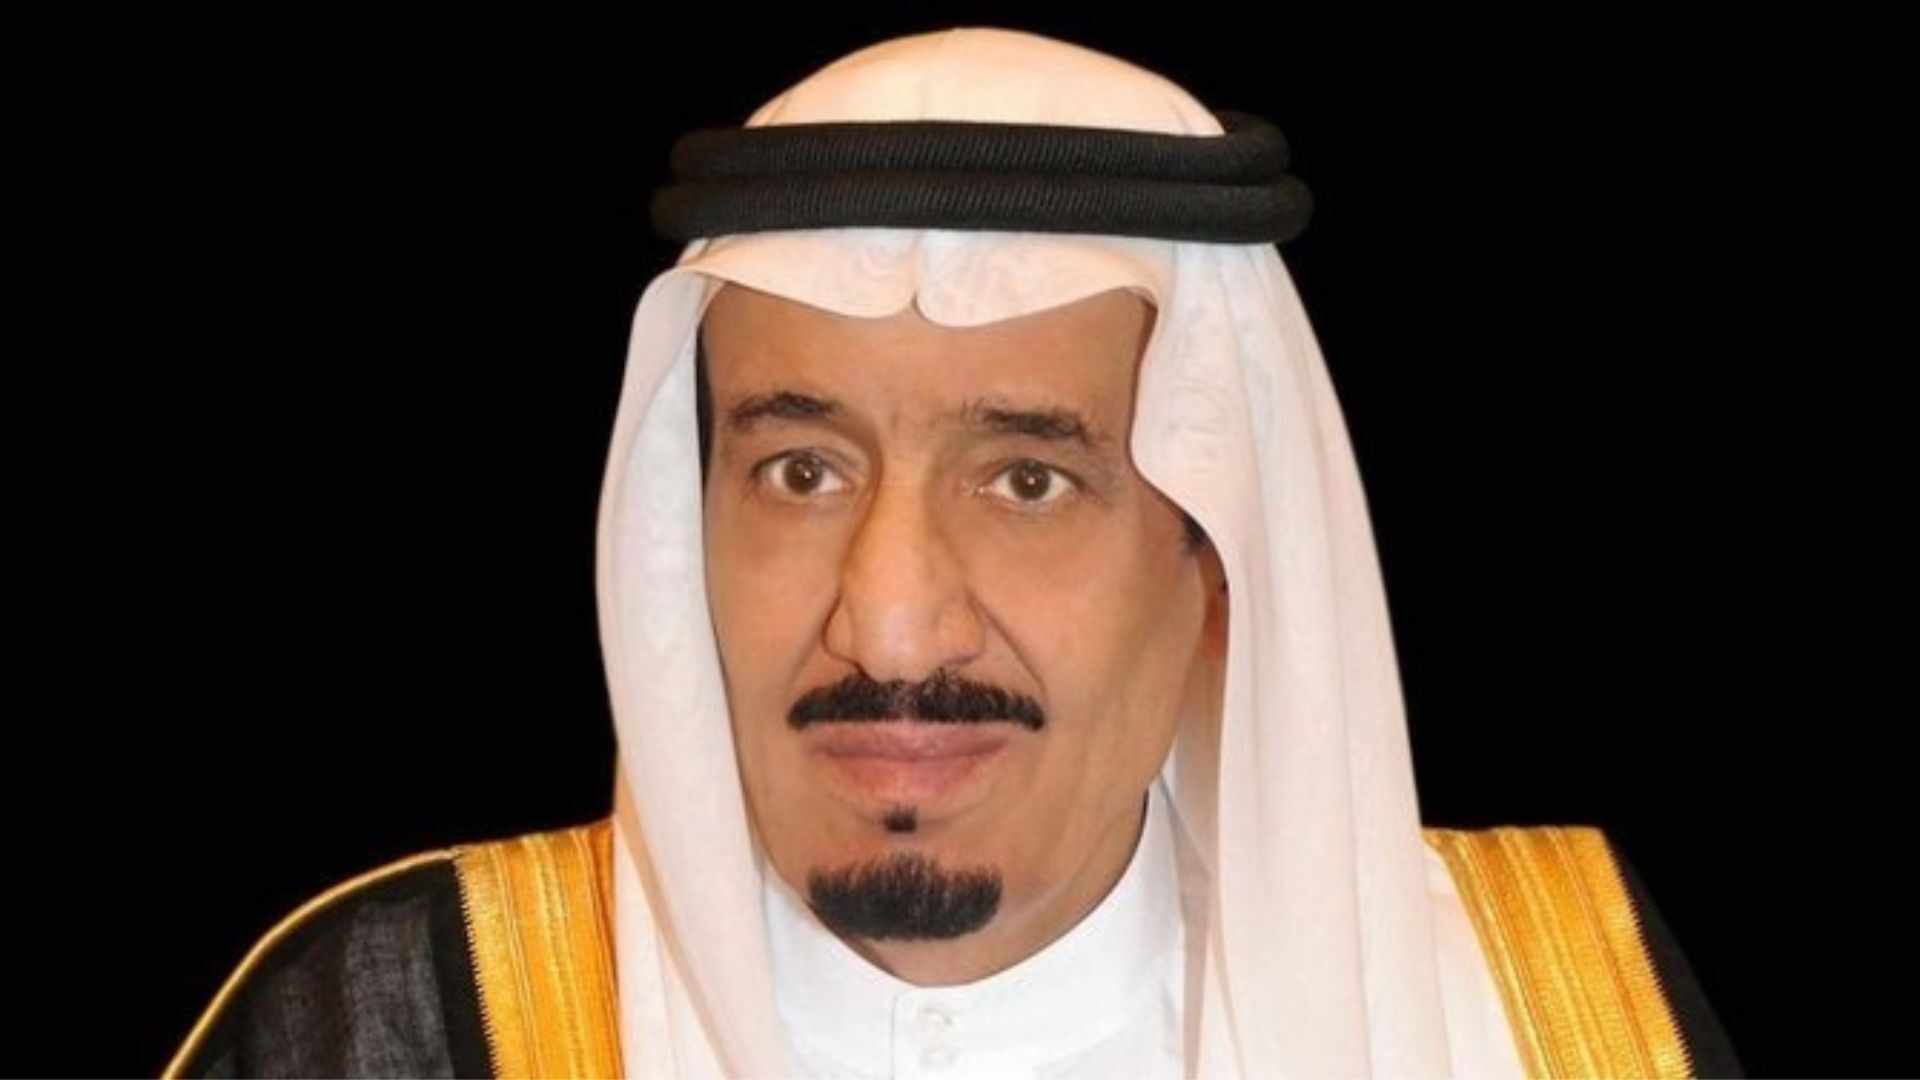 King Salman Bin Abdulaziz Al-Saud: Who Is He?